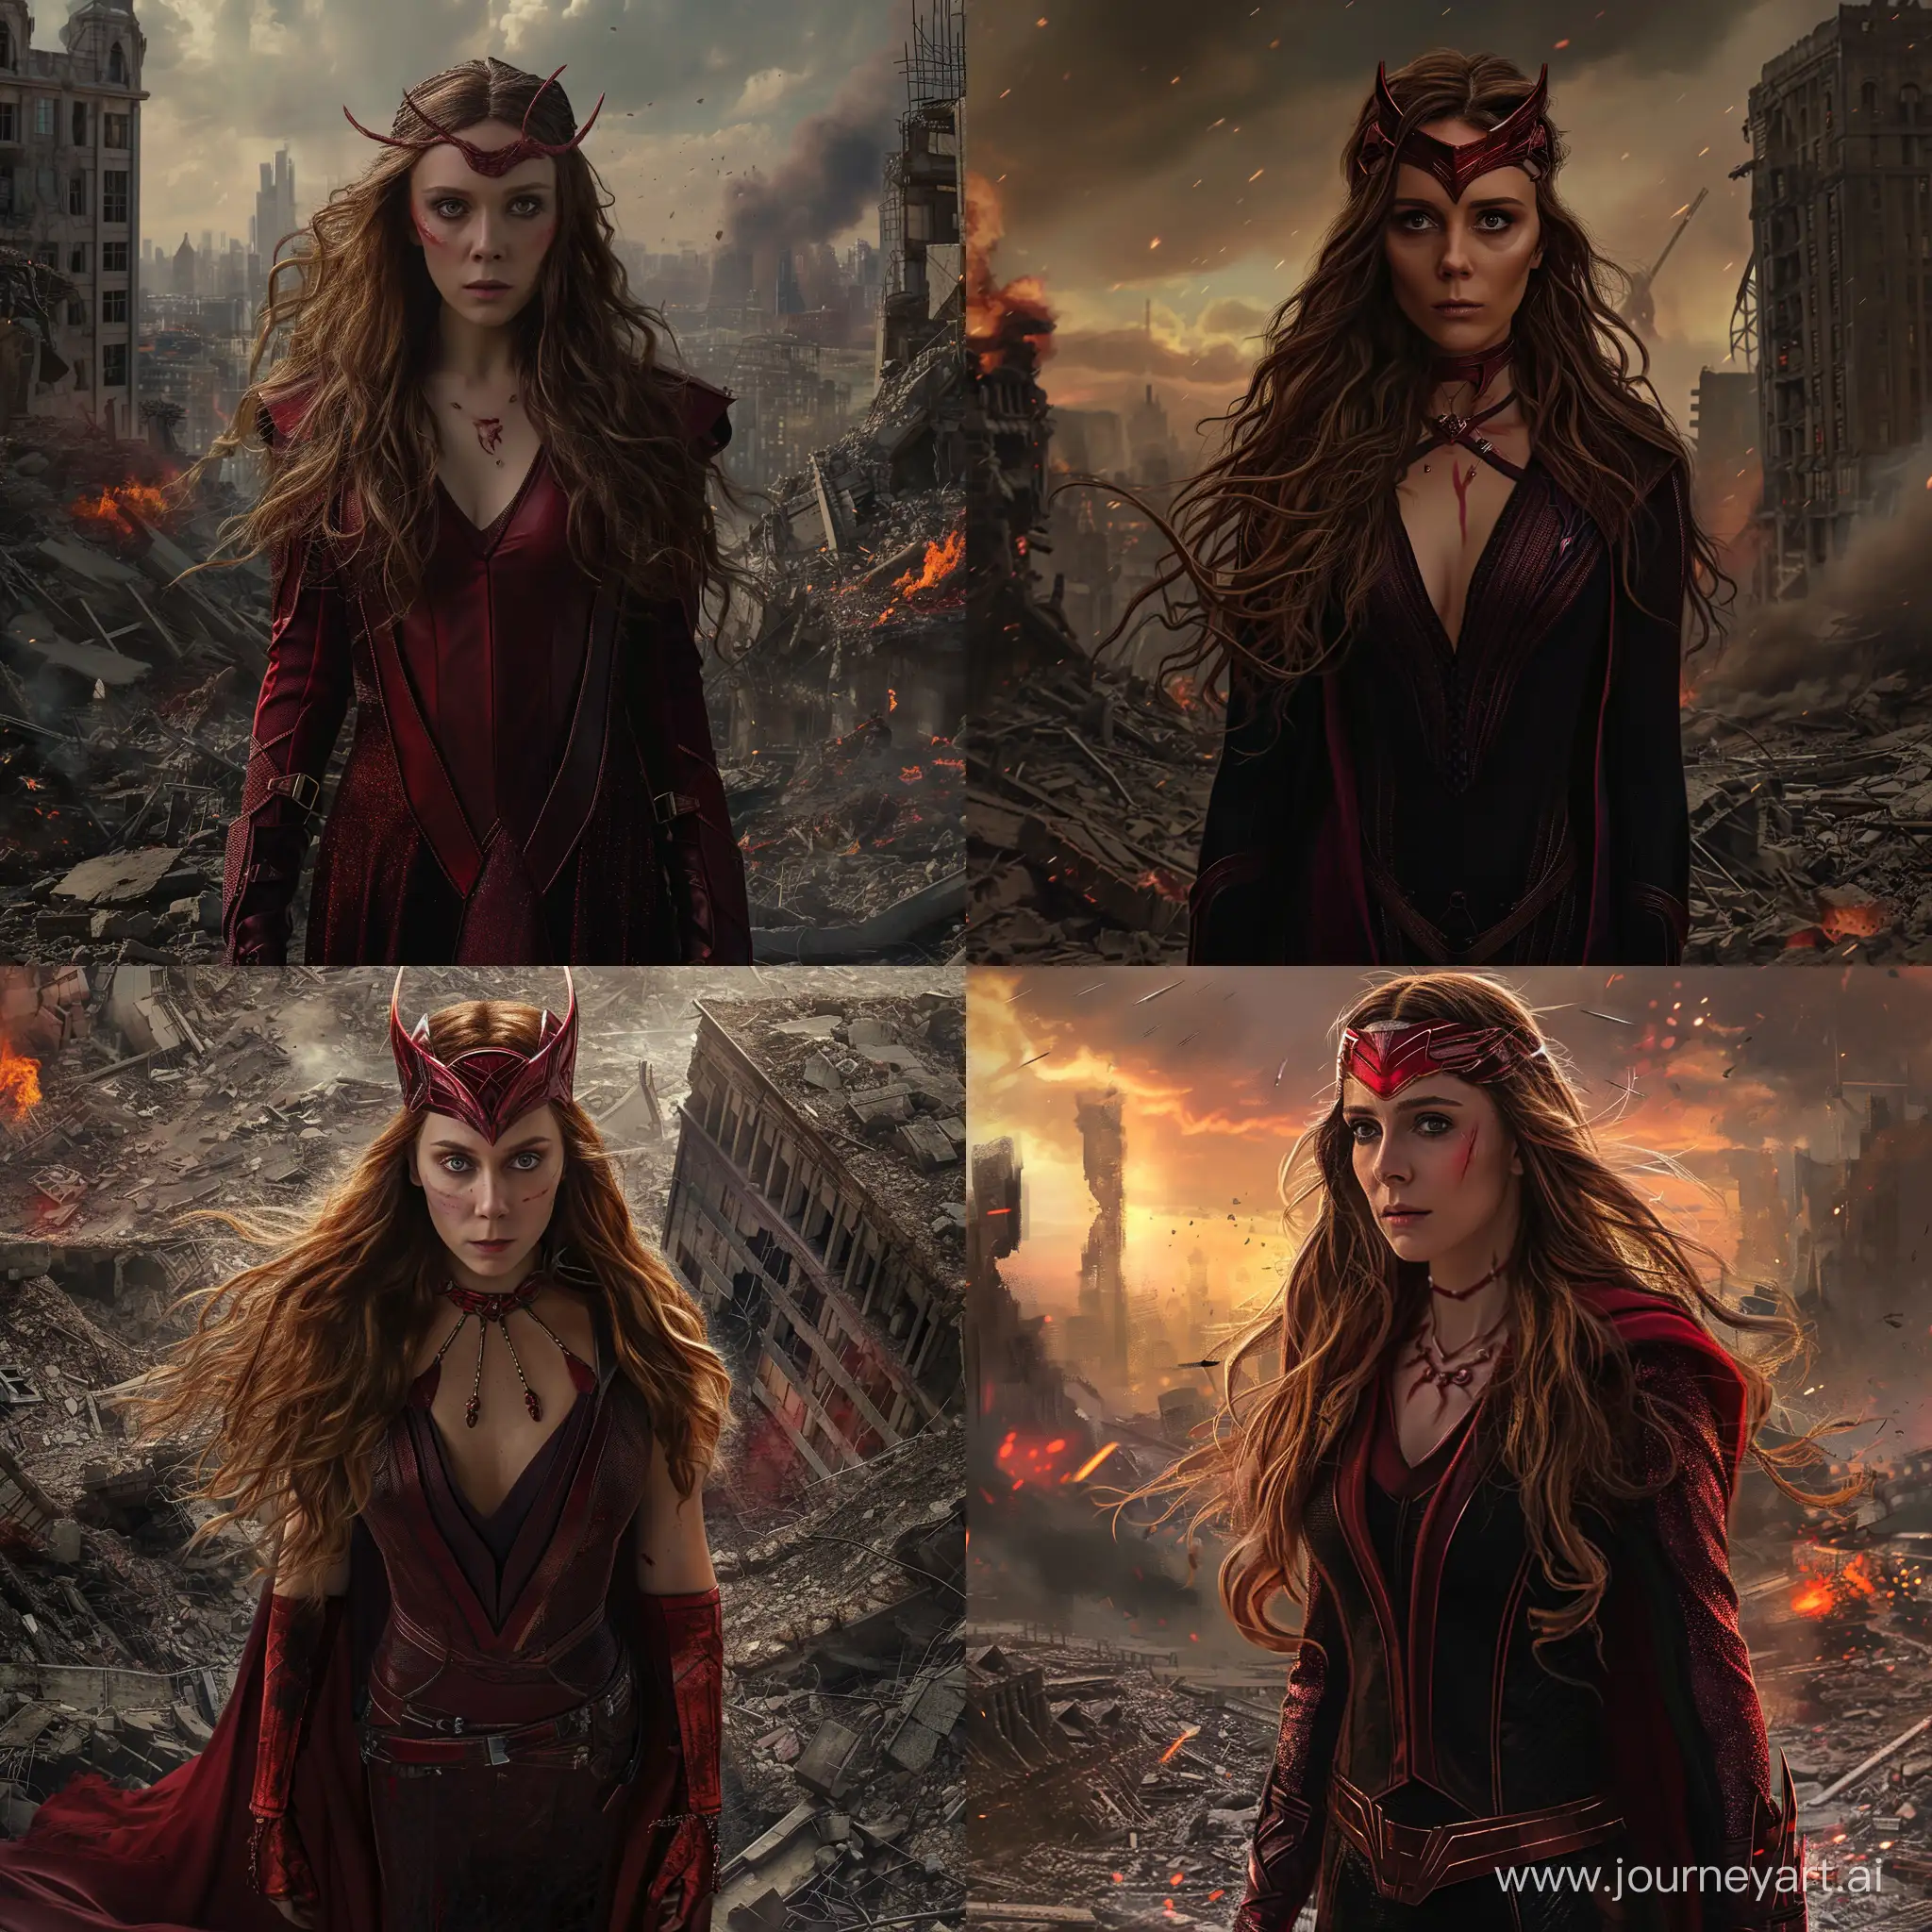 Elizabeth-Olsen-as-Scarlet-Witch-in-a-Detailed-8K-Portrait-amid-a-Destroyed-City